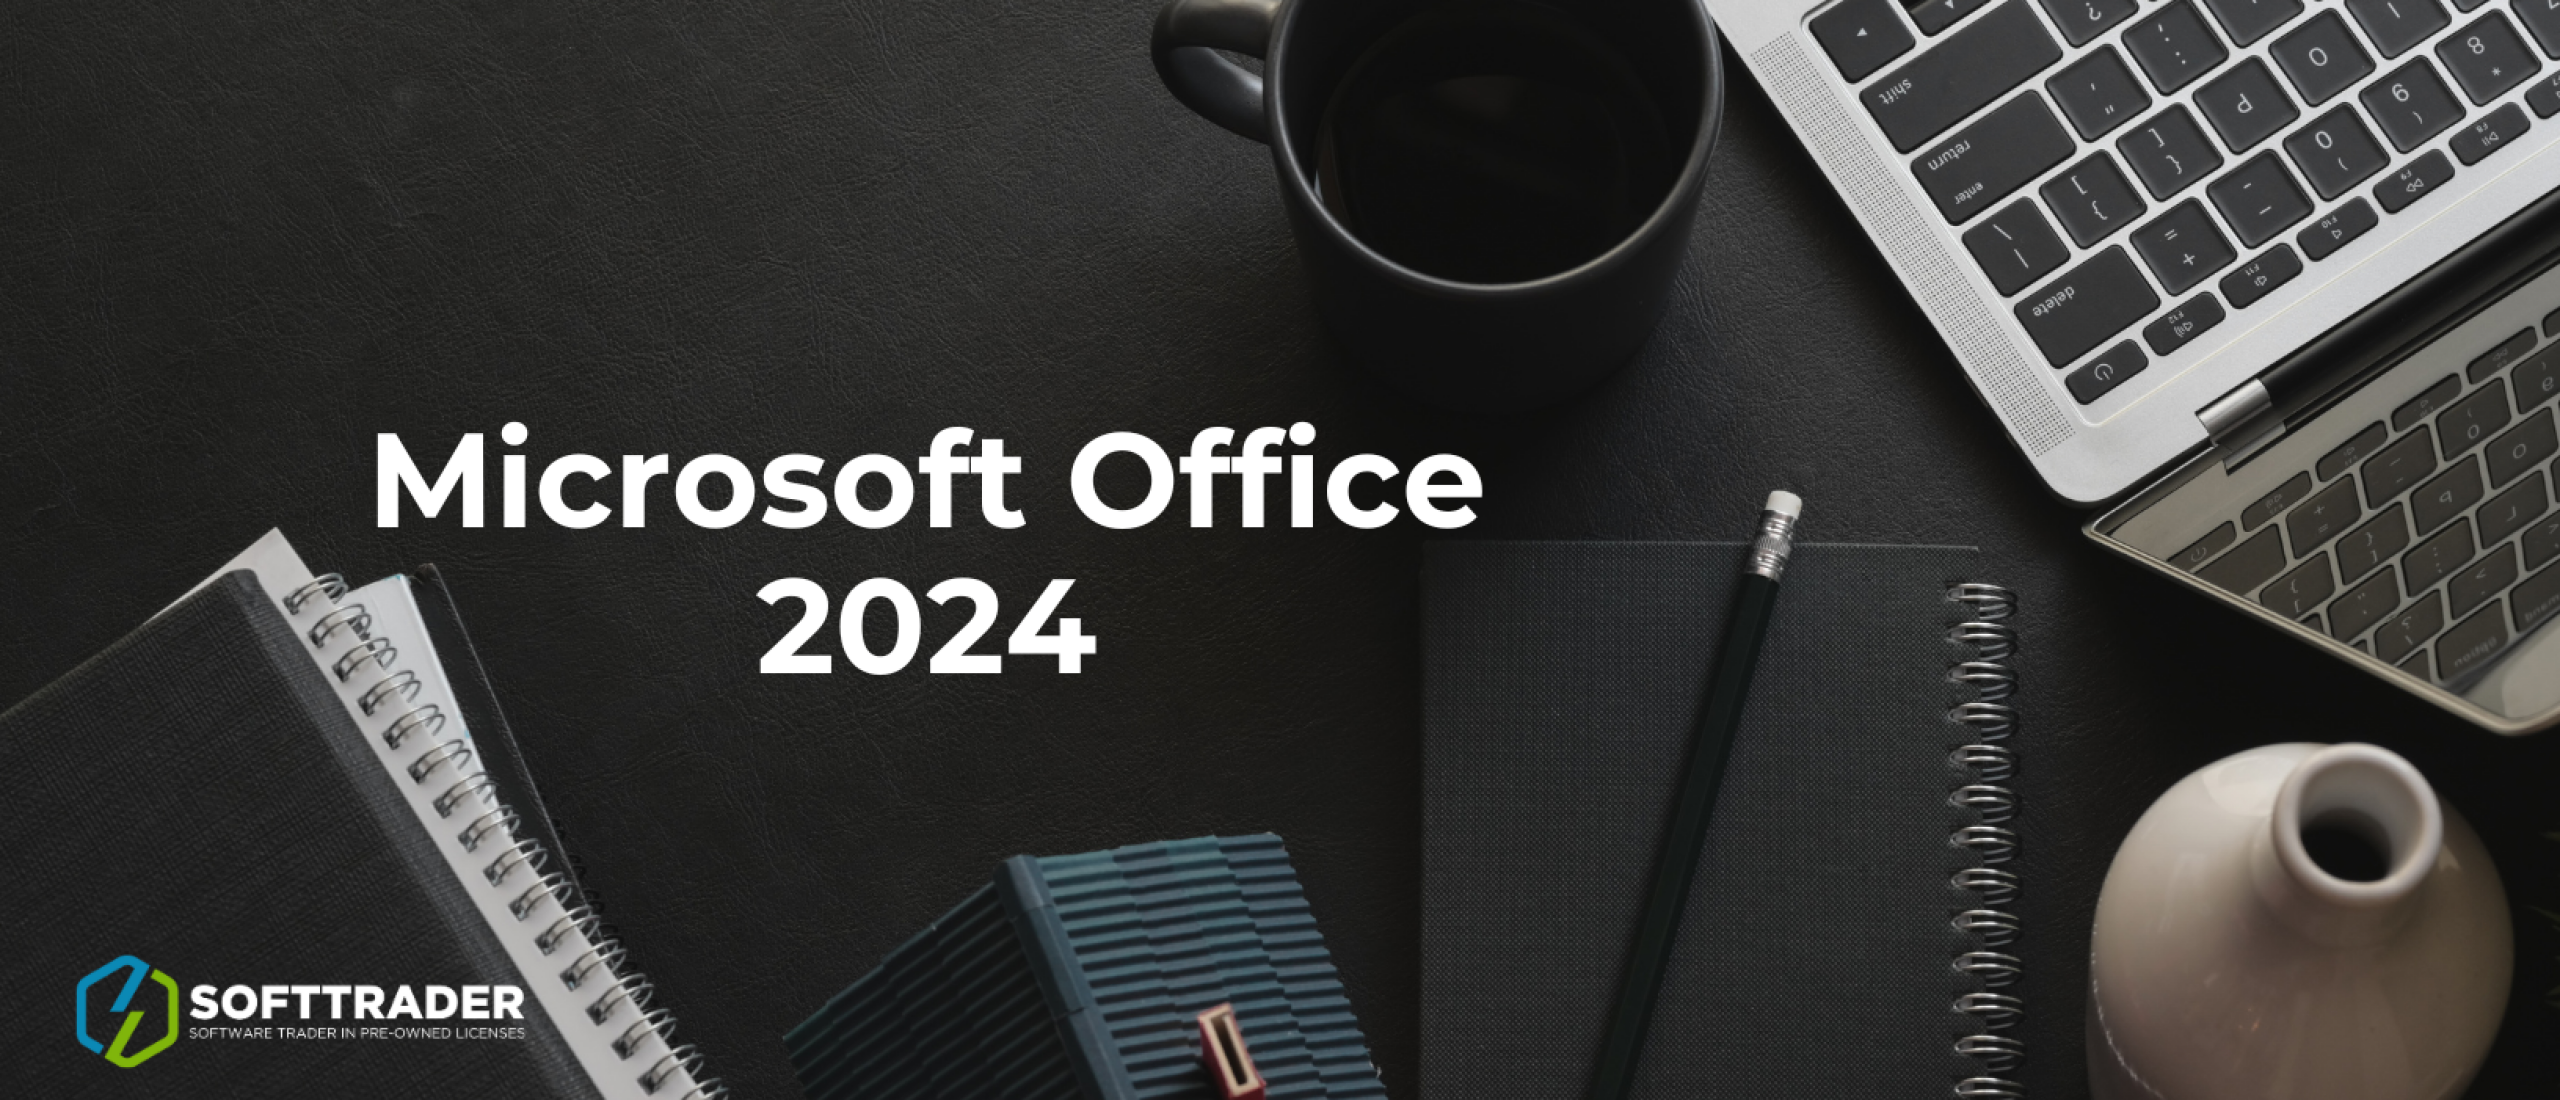 Microsoft Office 2024 blog image